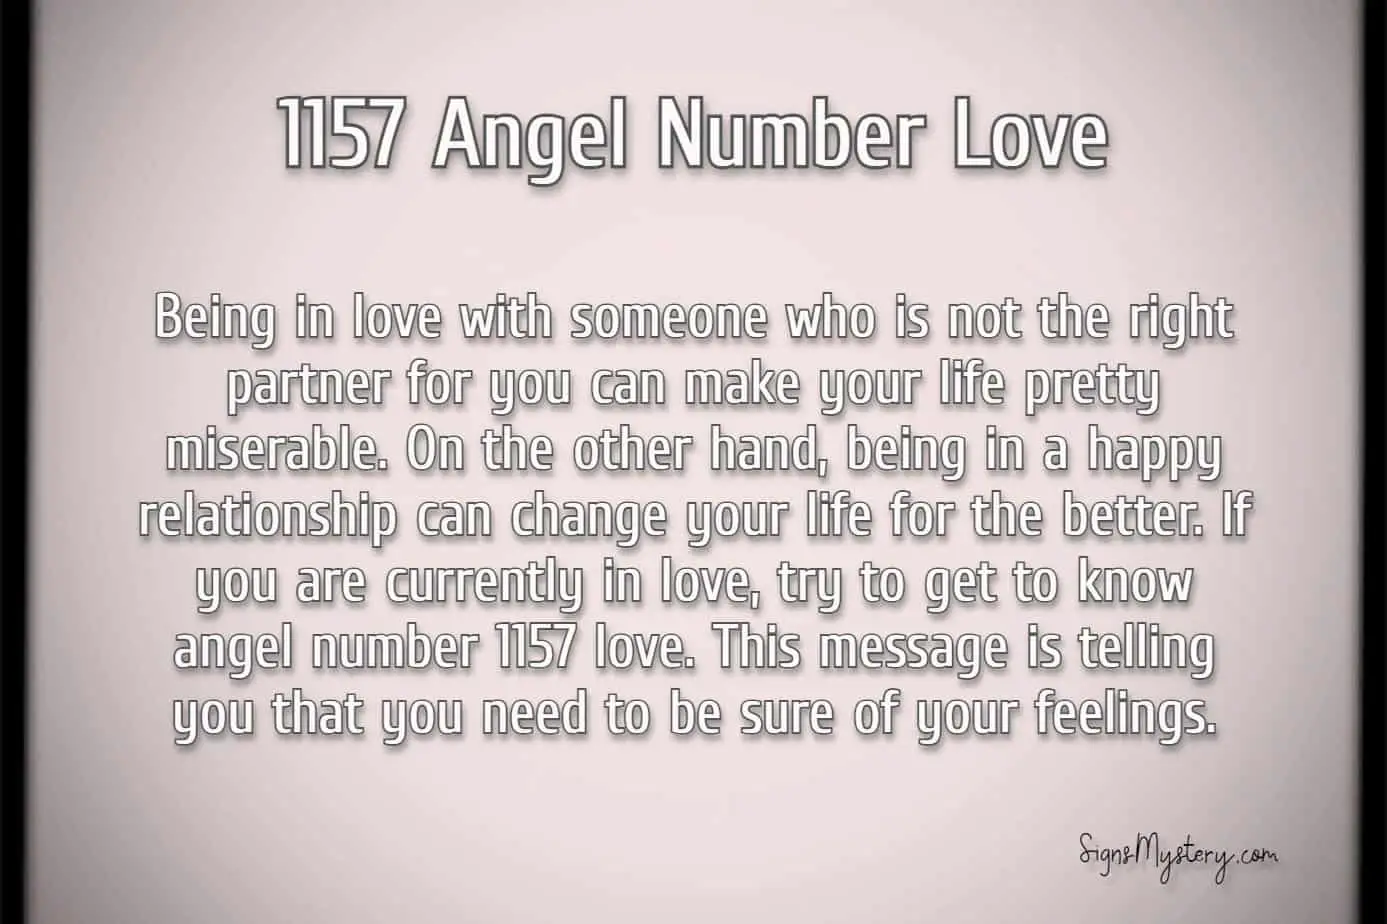 1157 angel number love